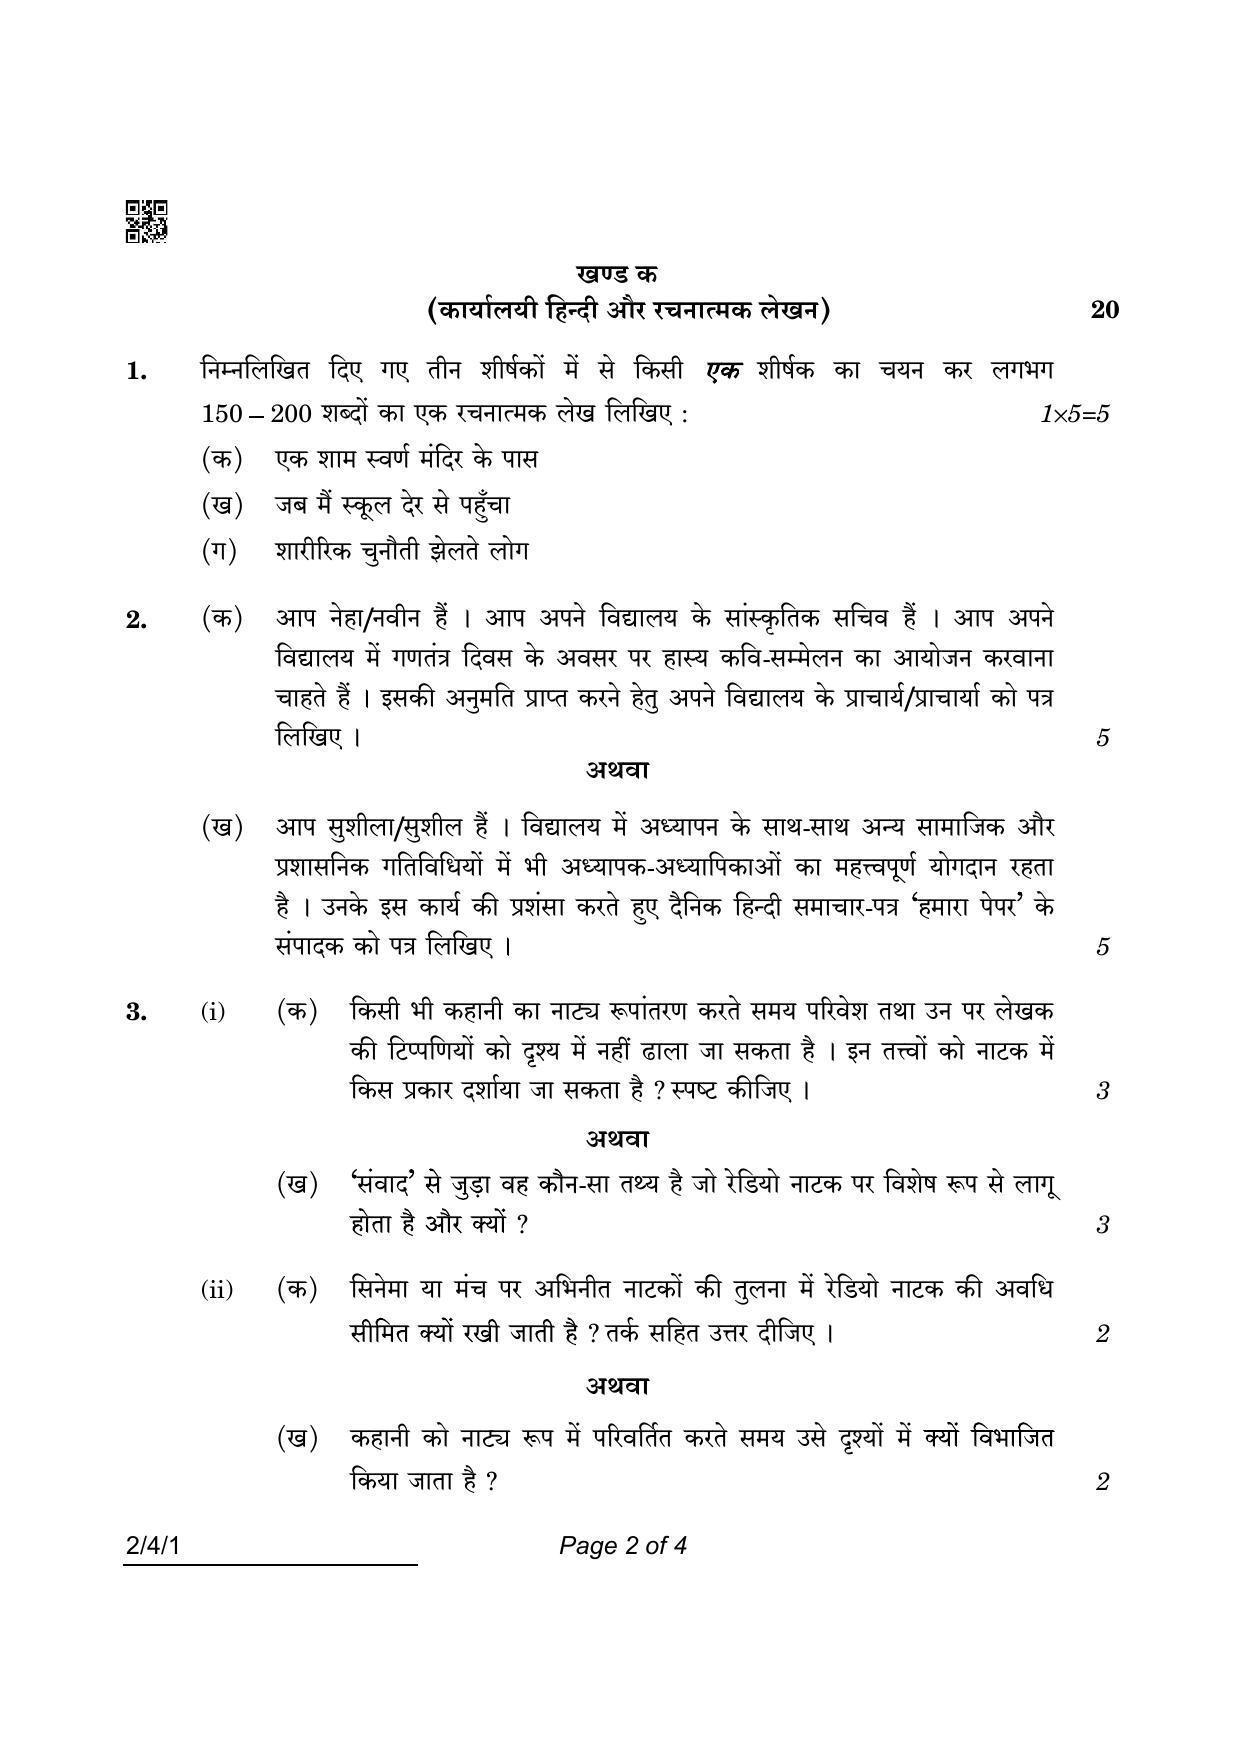 CBSE Class 12 2-4-1 Hindi Core 2022 Question Paper - Page 2